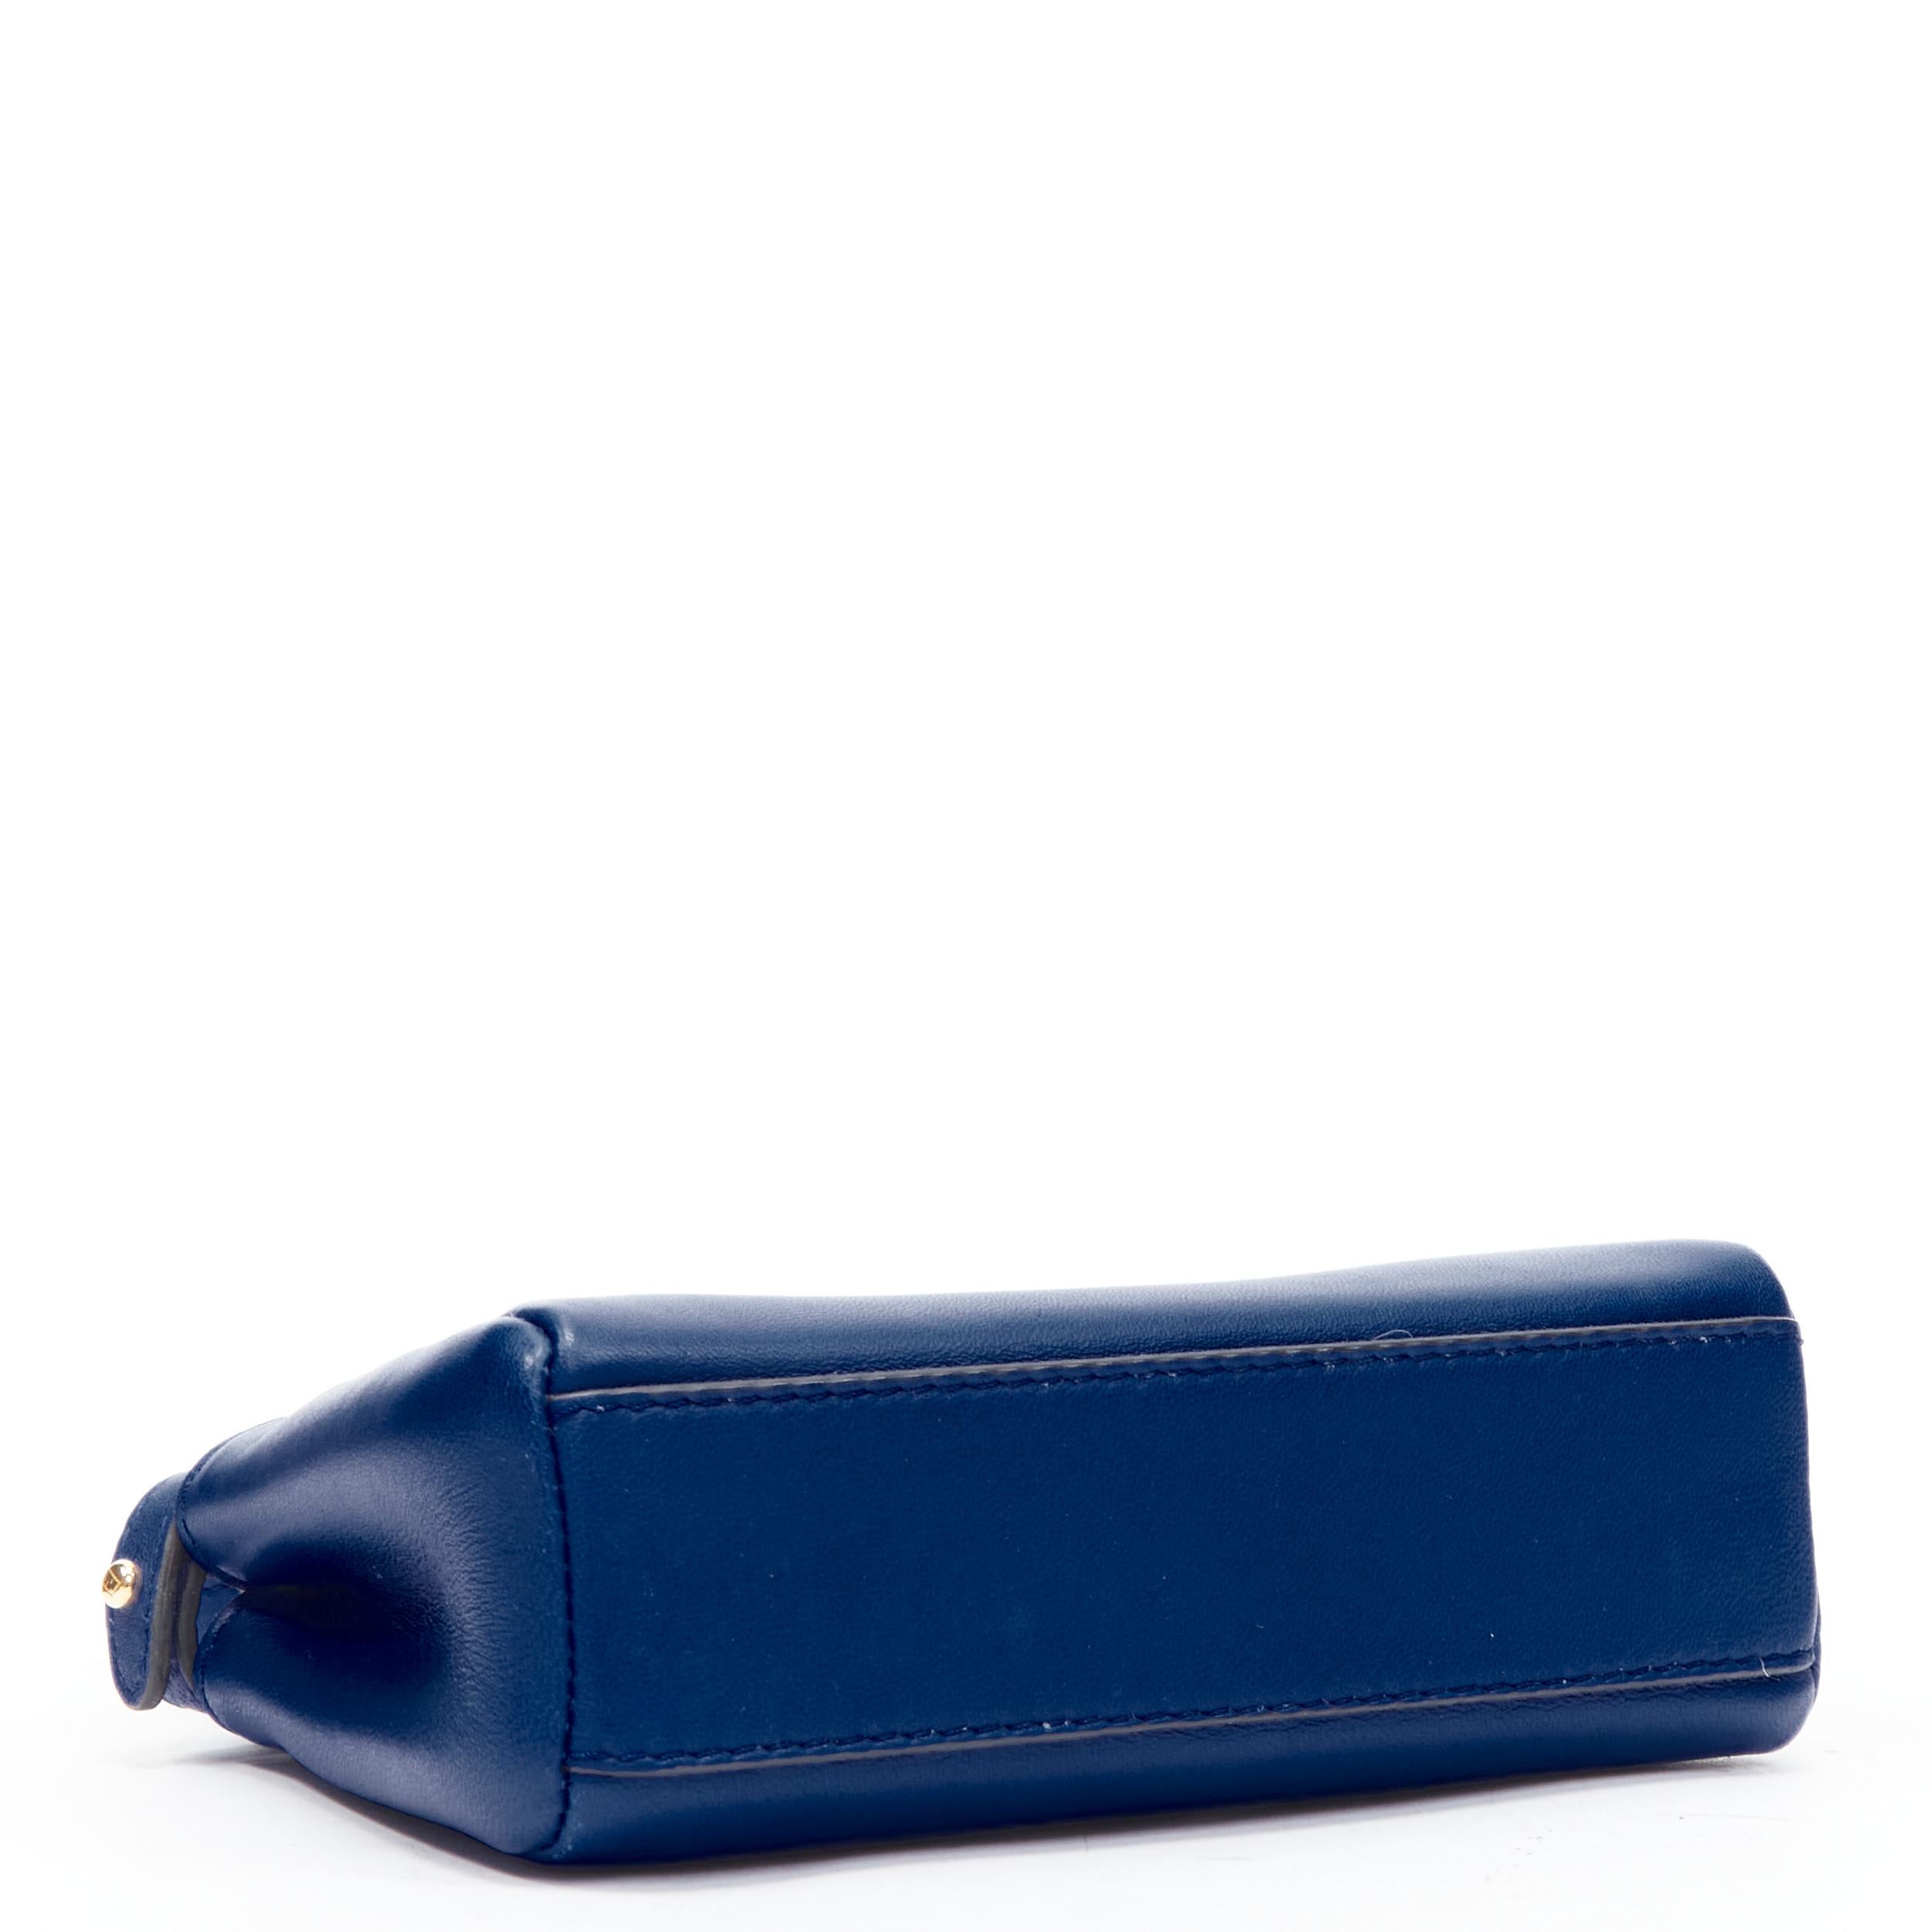 FENDI Micro Peekaboo blue leather gold hardware crossbody bag For Sale 1